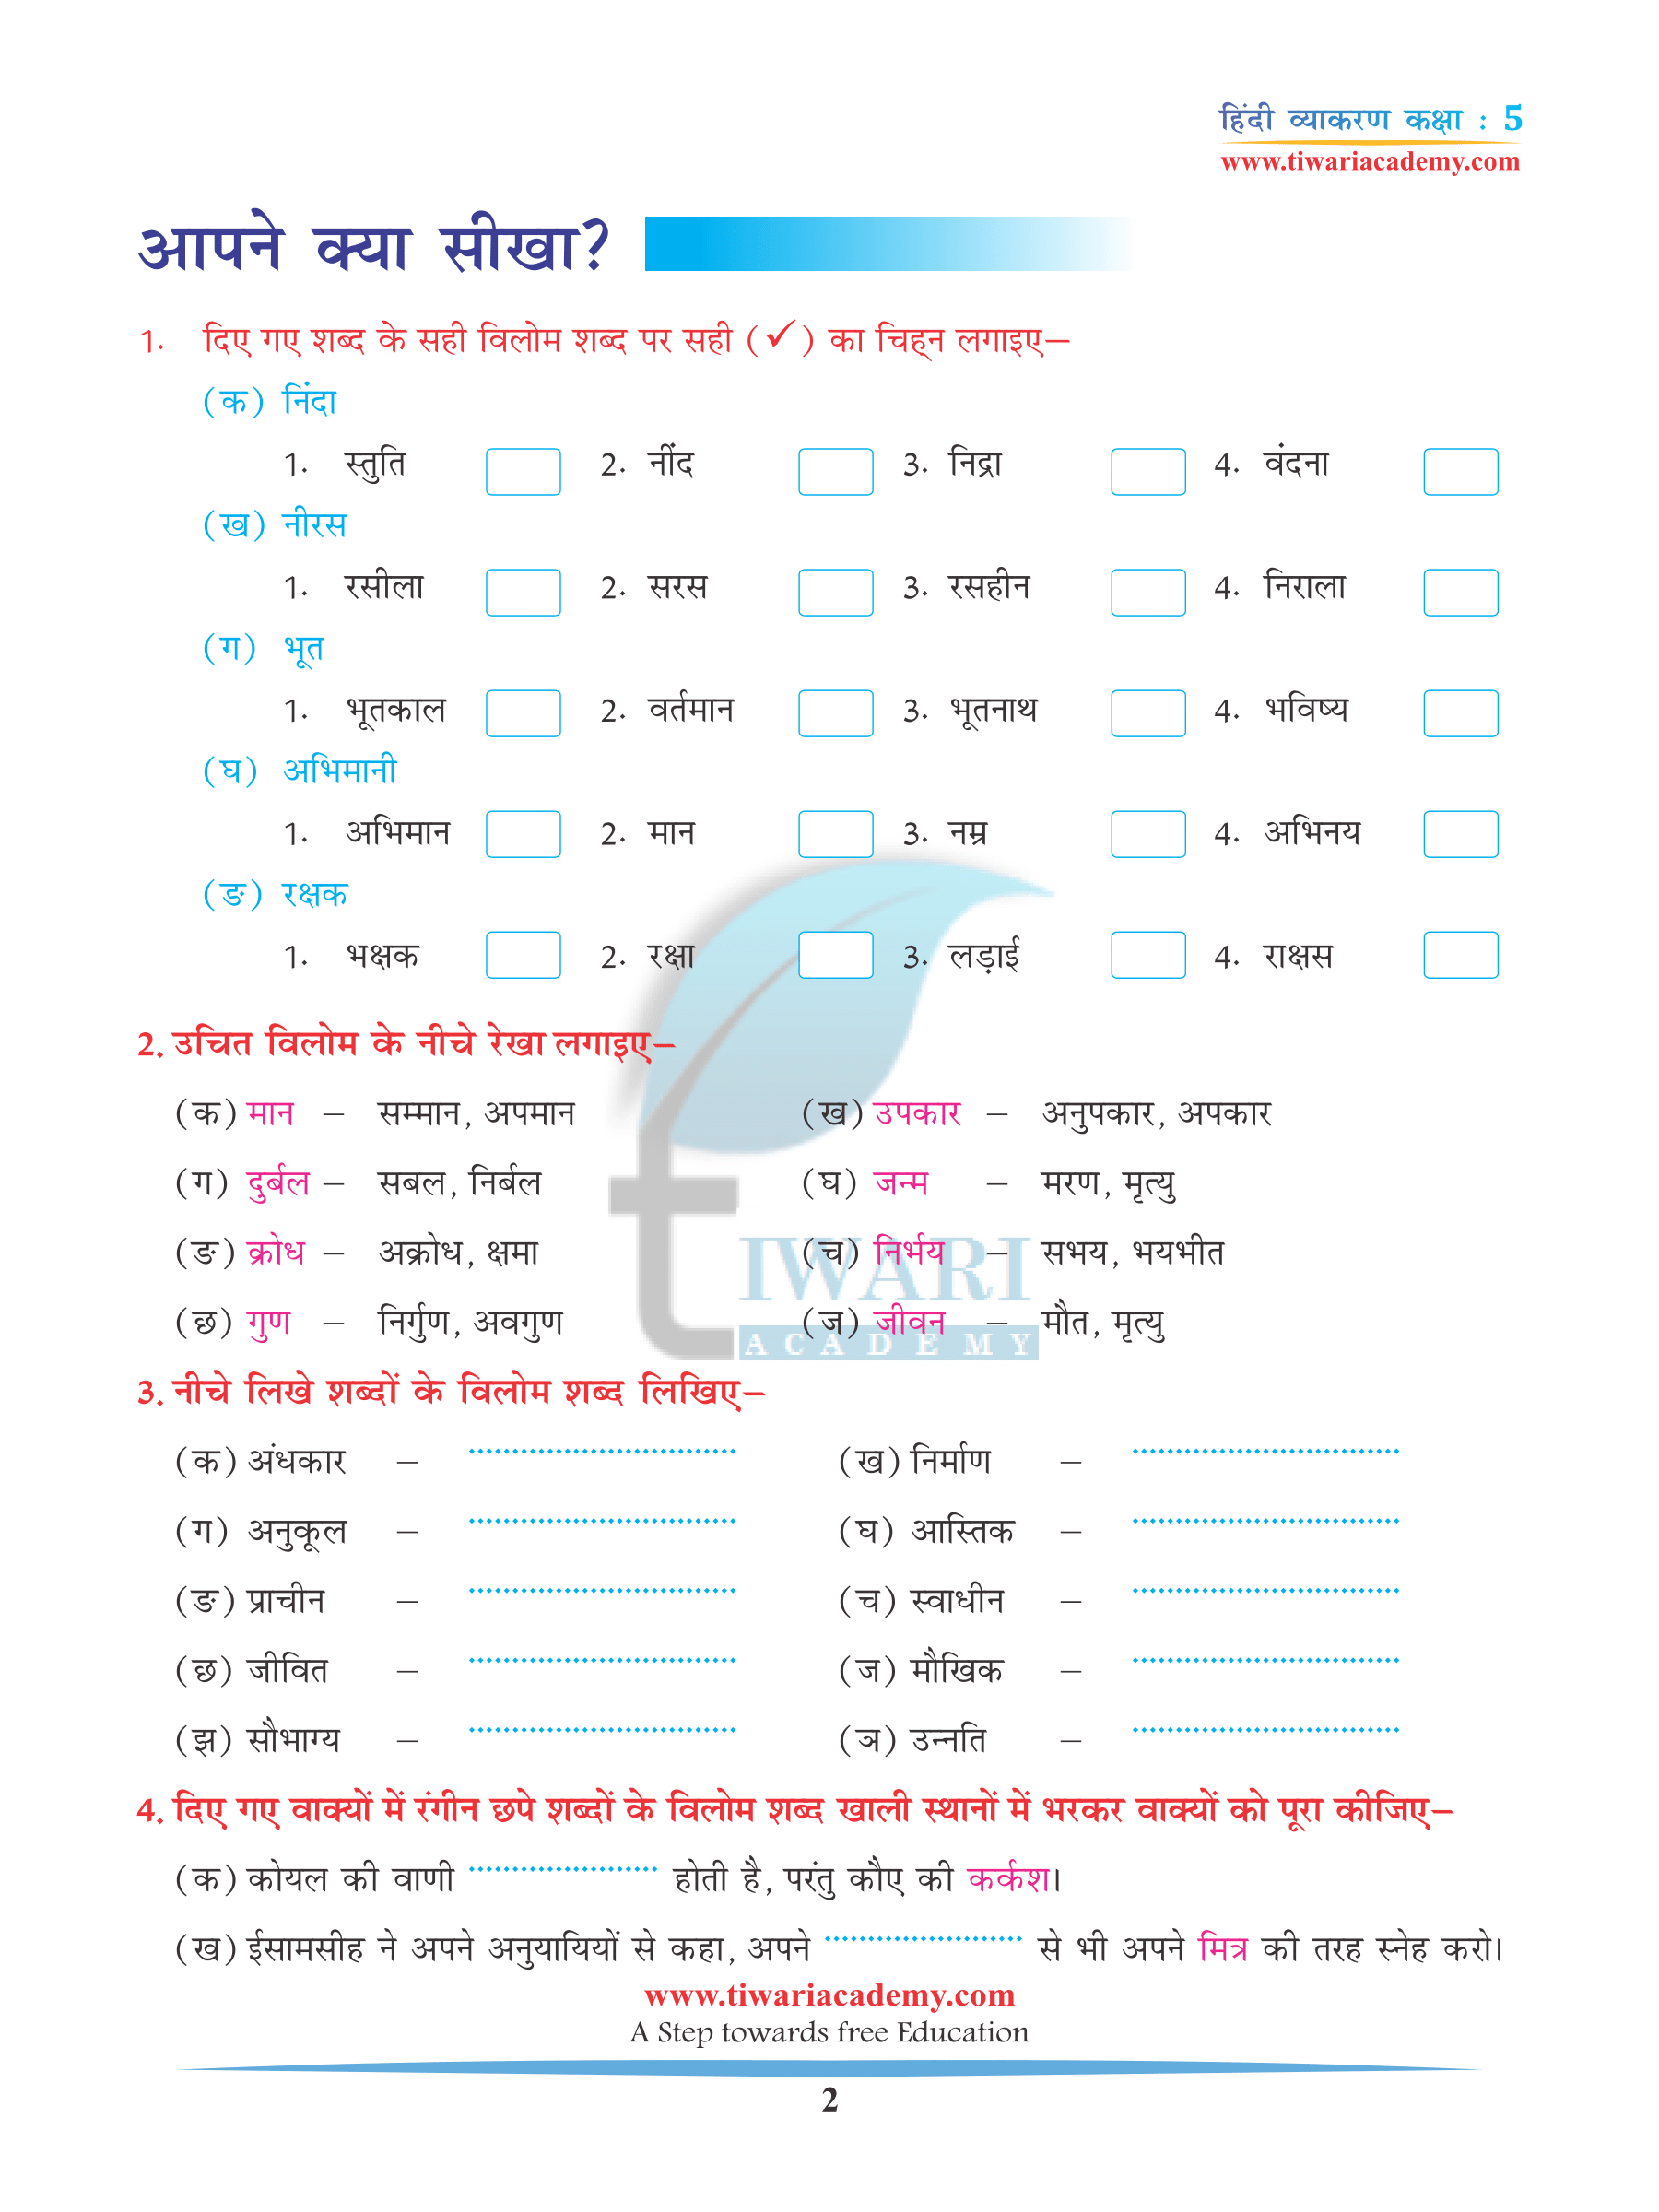 CBSE Class 5 Hindi Grammar Chapter 14 Vilom Shabd or Vipriitarthak Shabd